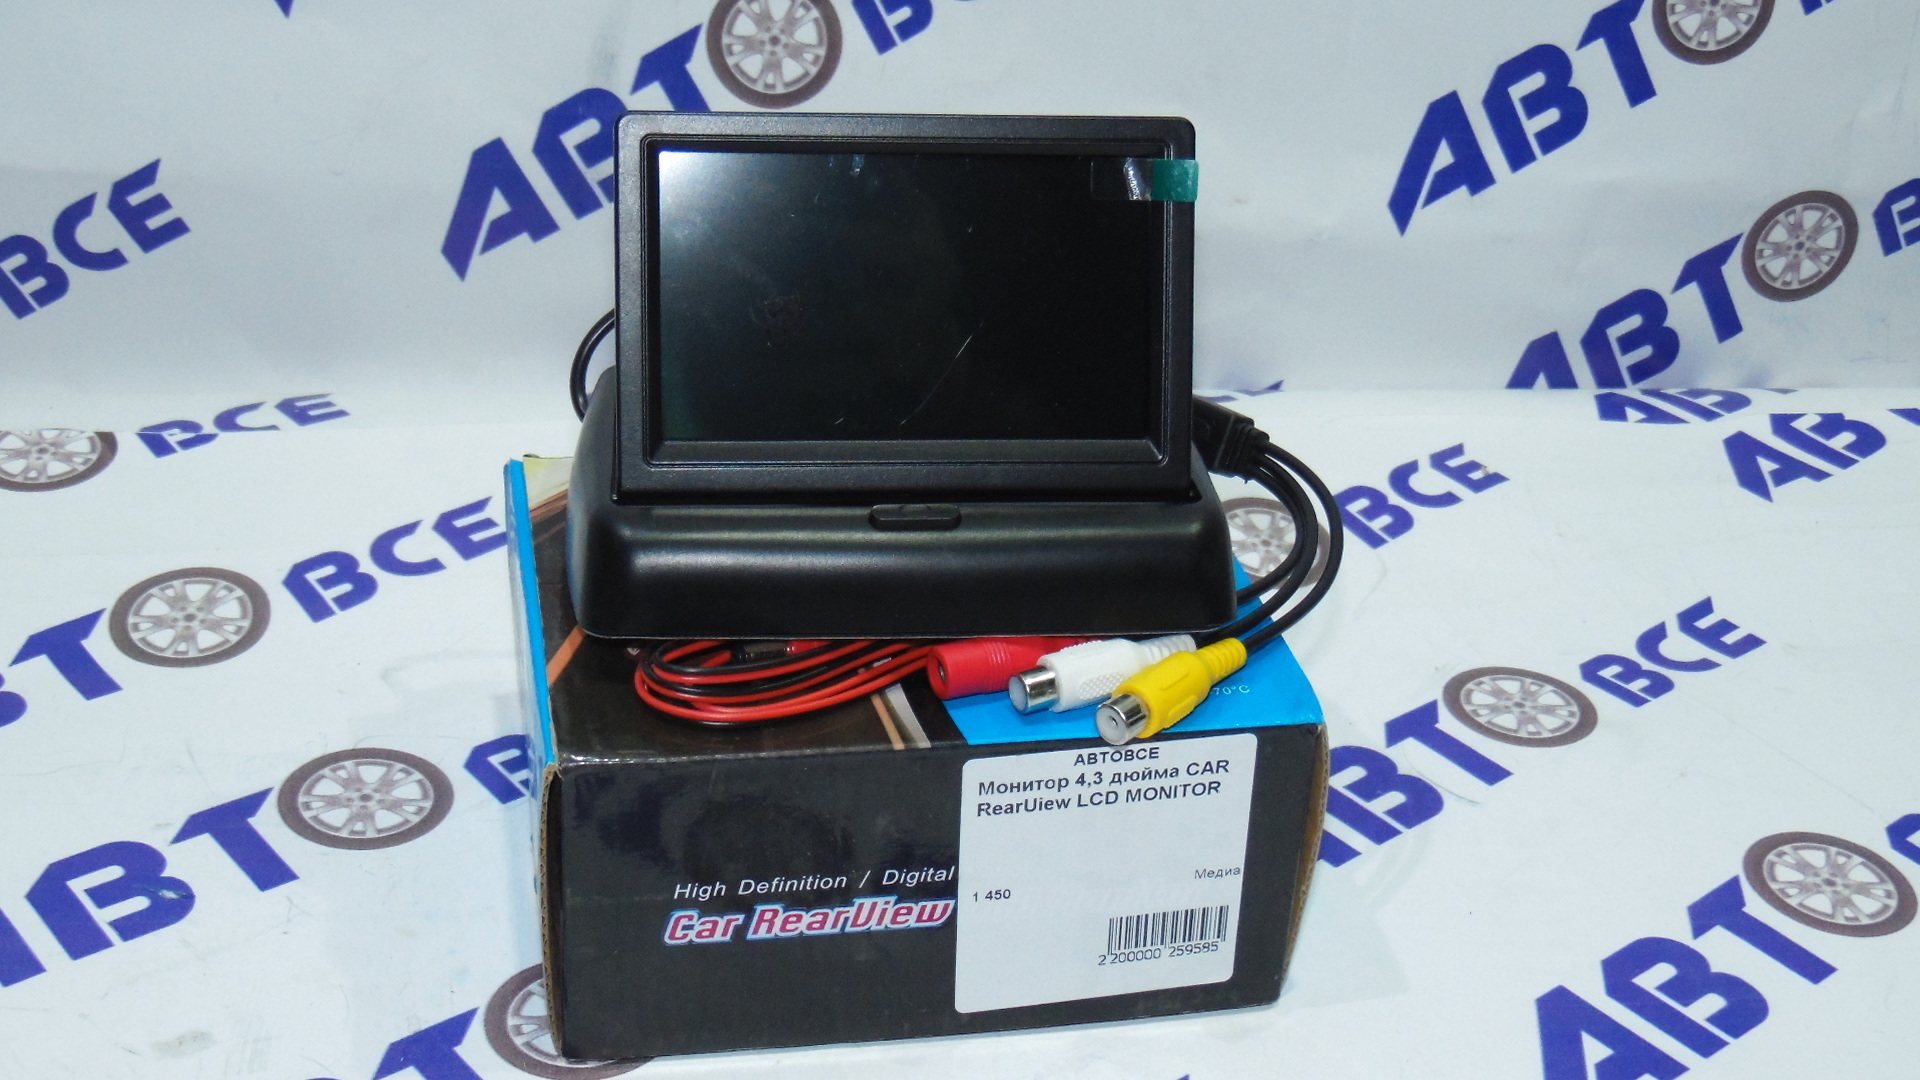 Монитор 4,3 дюйма складной CAR RearUiew LCD MONITOR 